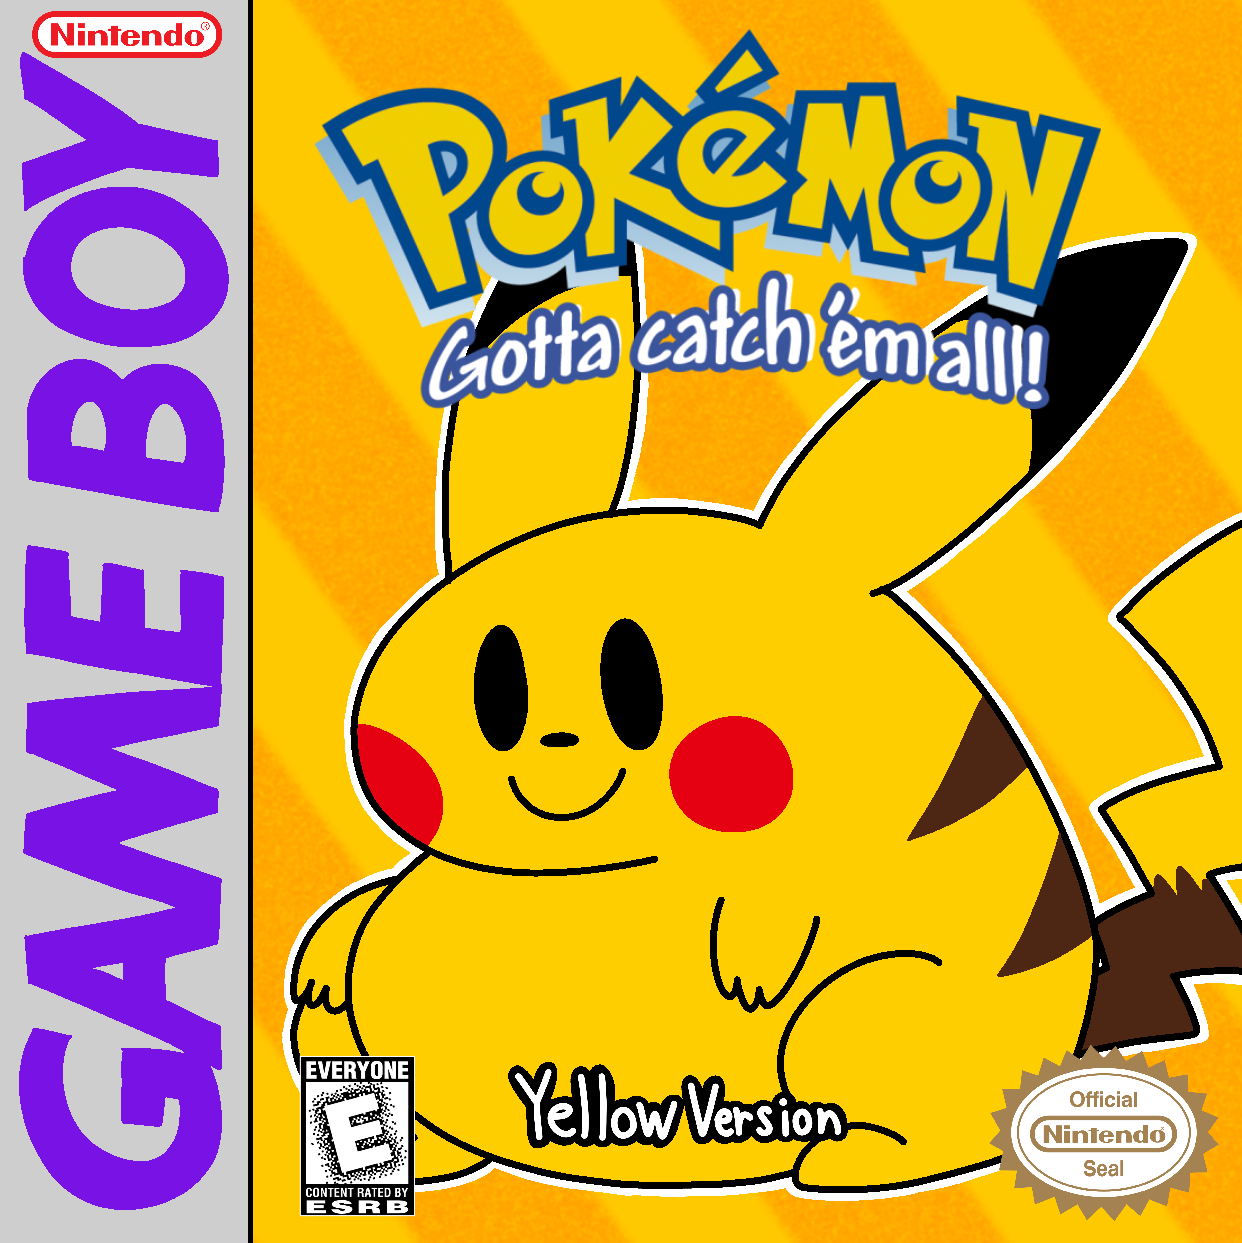 Pokemon Yellow Version (Game Boy) HQ Box Art by JadeLune on DeviantArt